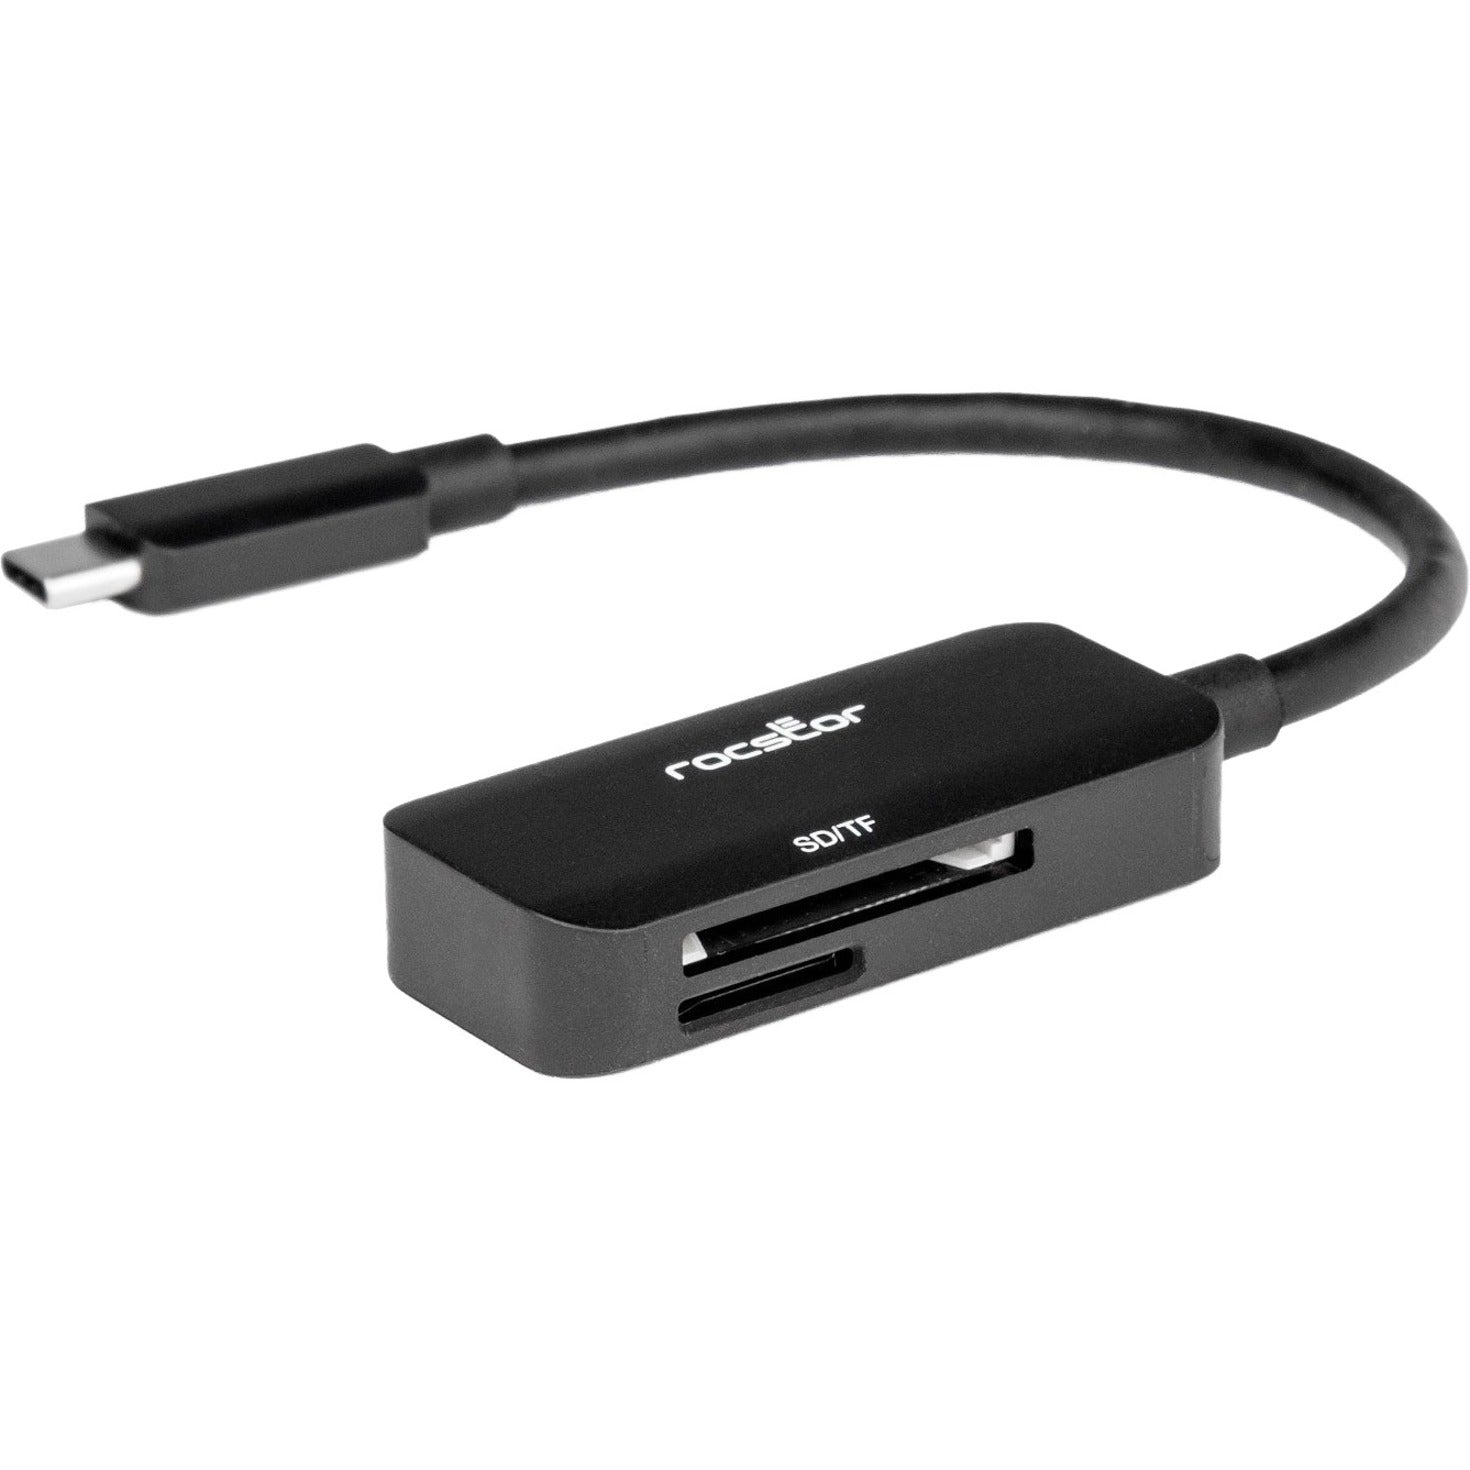 Rocstor Y10A252-B1 Premium USB-C Multi Media Memory Card Reader, Thunderbolt, 2 Year Warranty